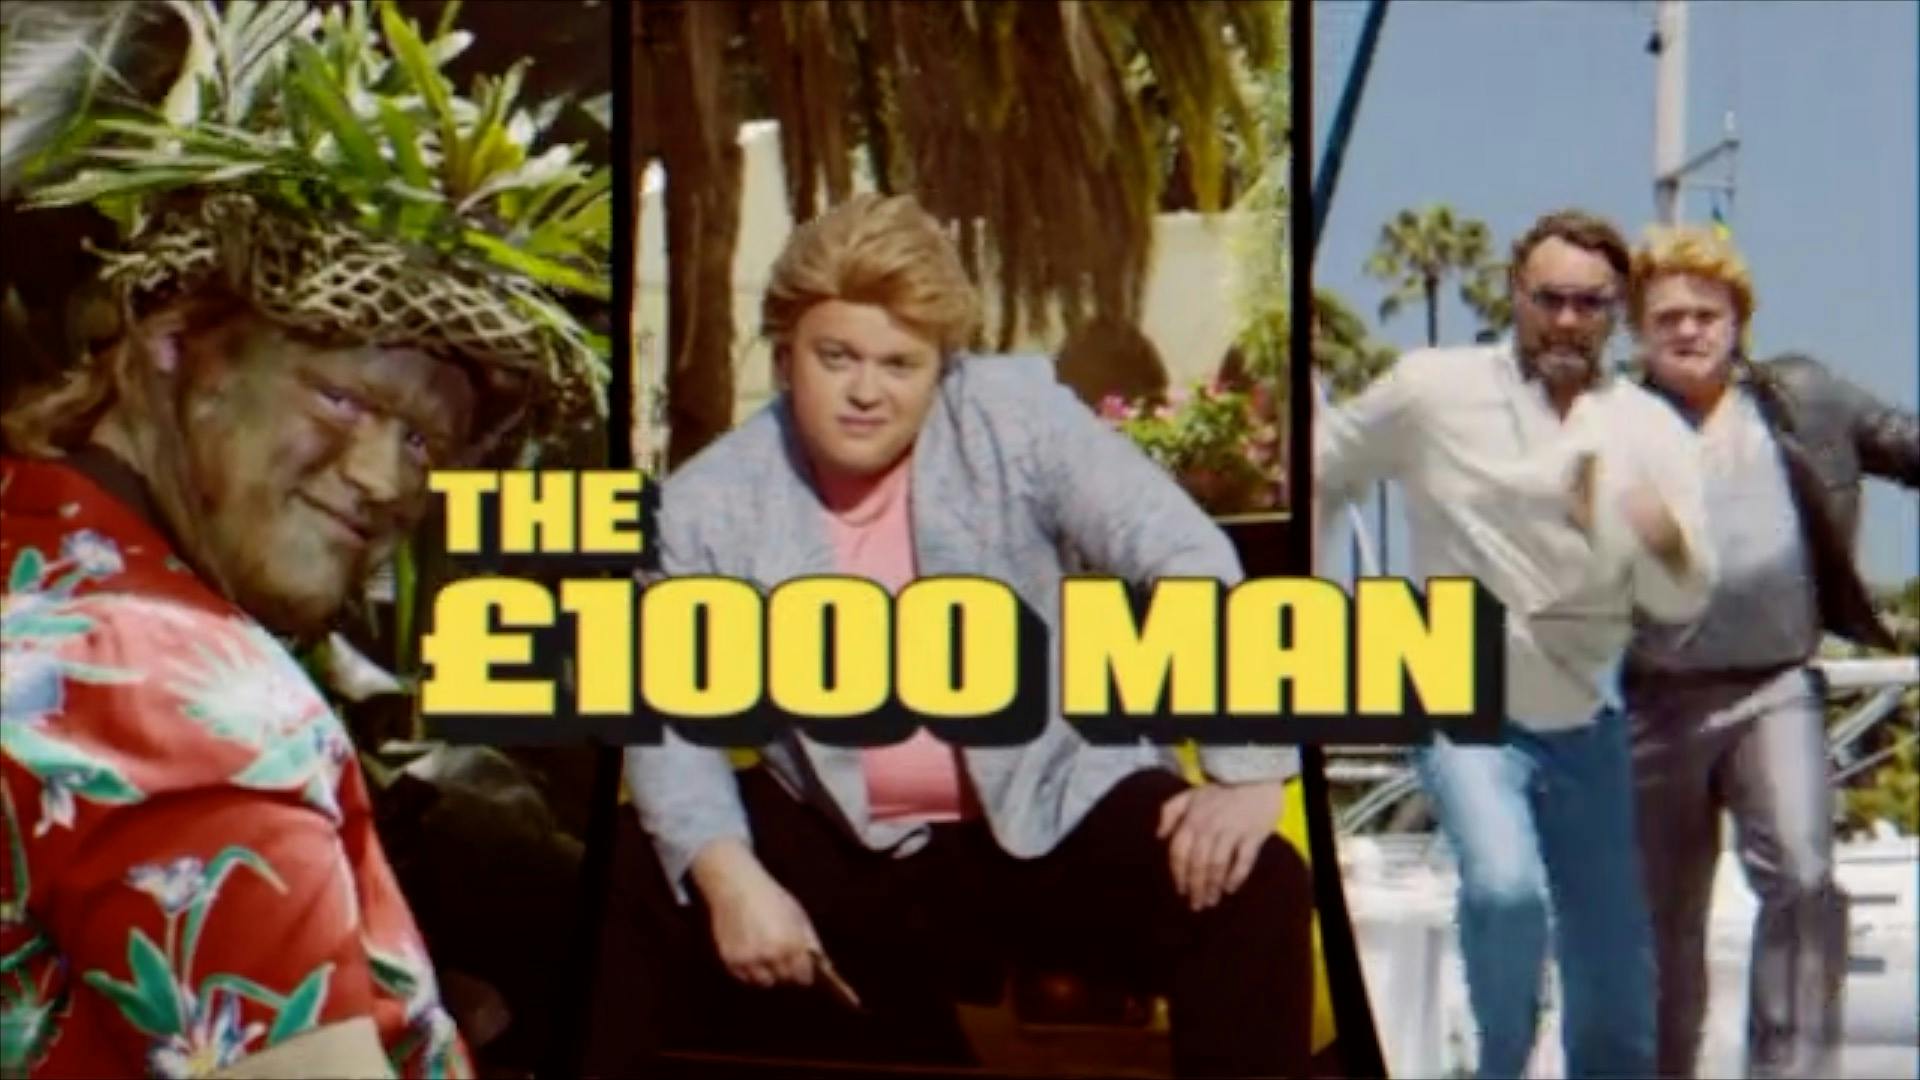 The £1000 Man